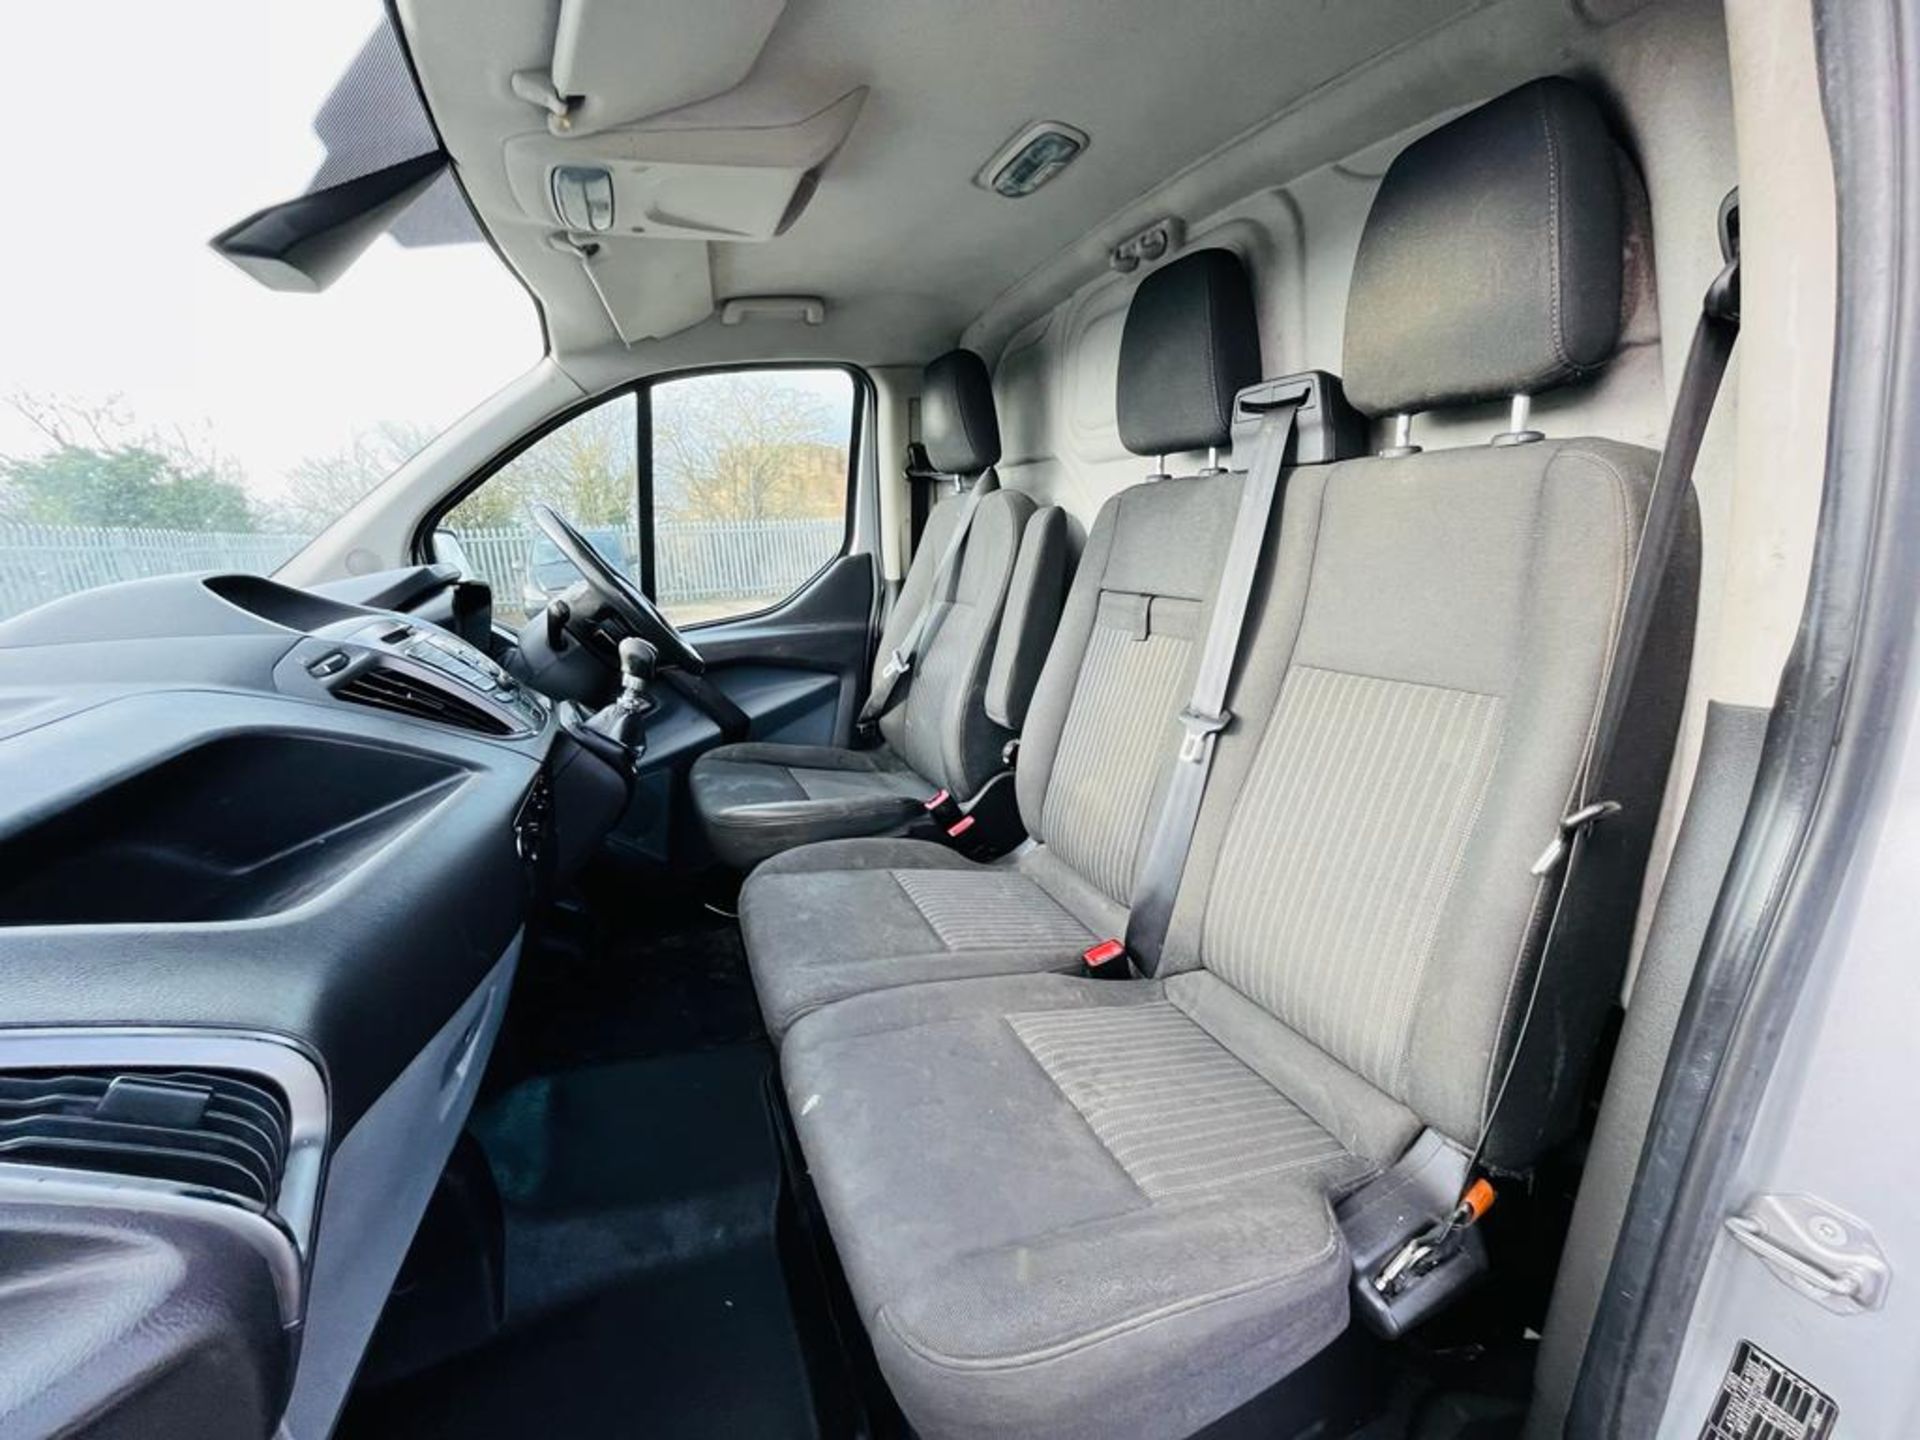 Ford Transit Custom 2.2 TDCI Trend E-Tech 2015 '15 Reg' - Panel Van - Image 19 of 22